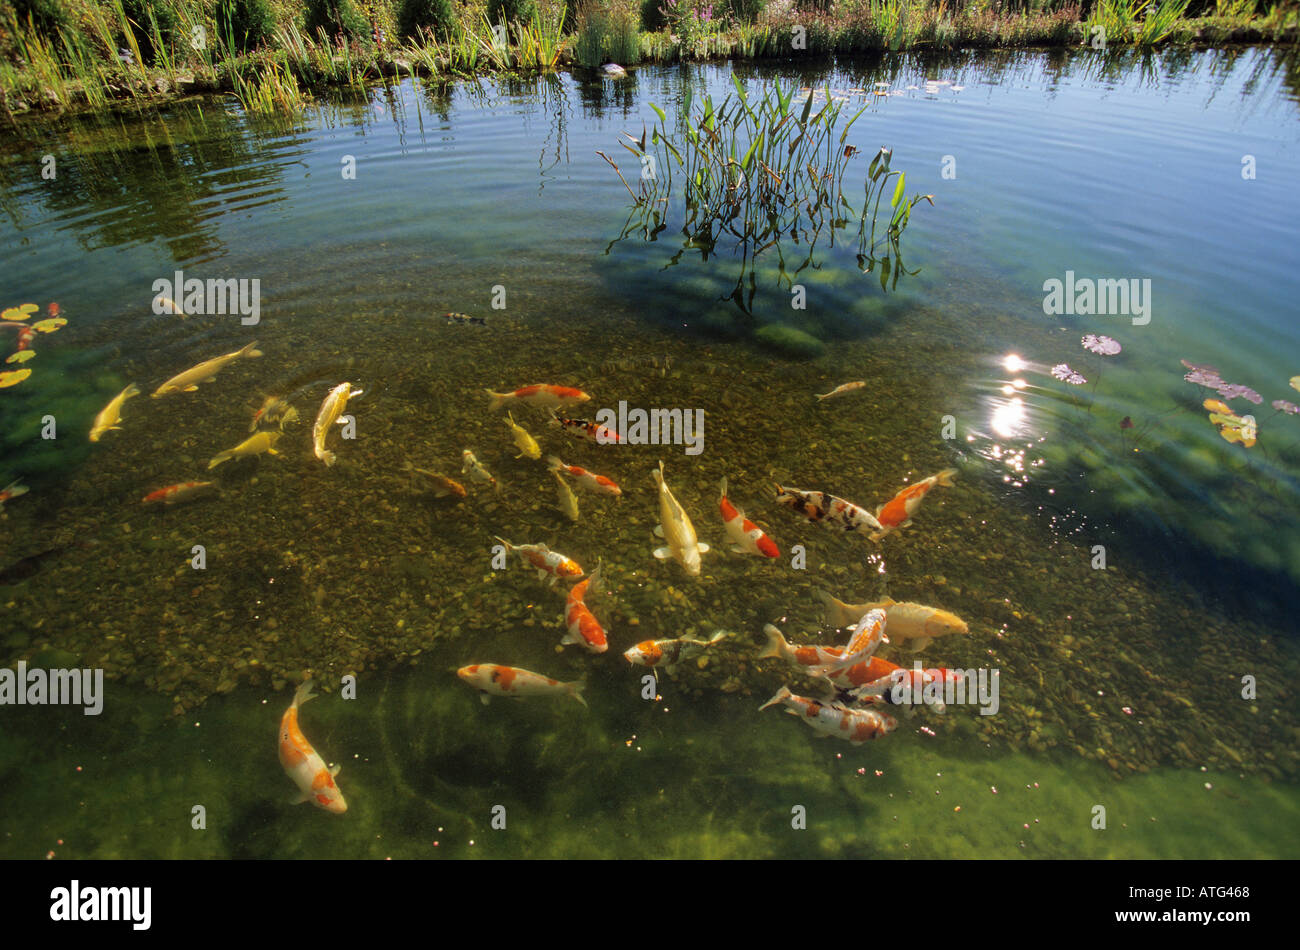 pond with koi carps Stock Photo